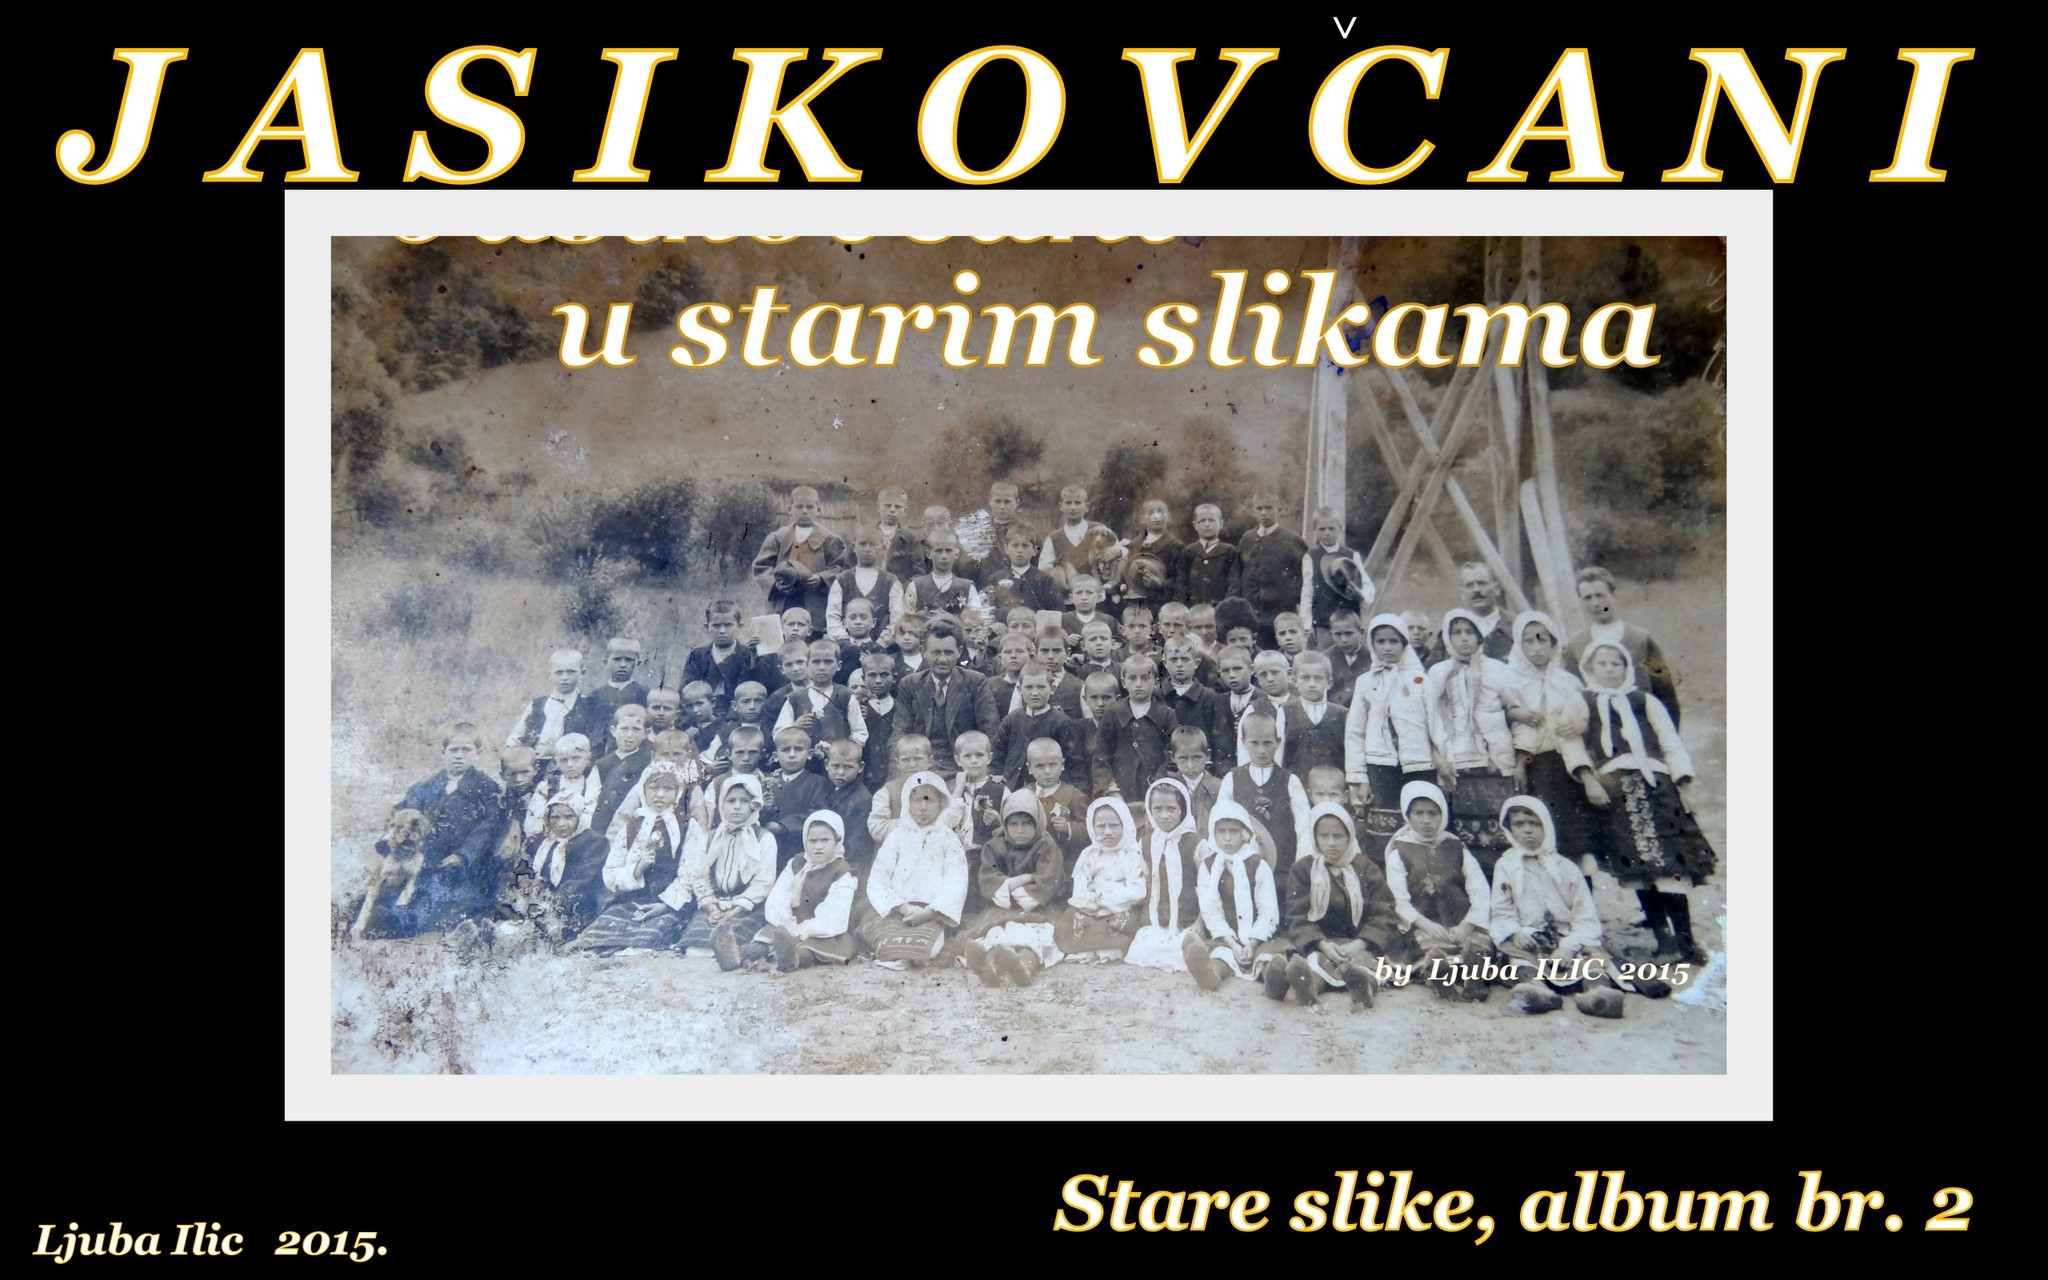 People Of Jasikovo In Old Photos - Jasikovcani U Starim Slikama cover image